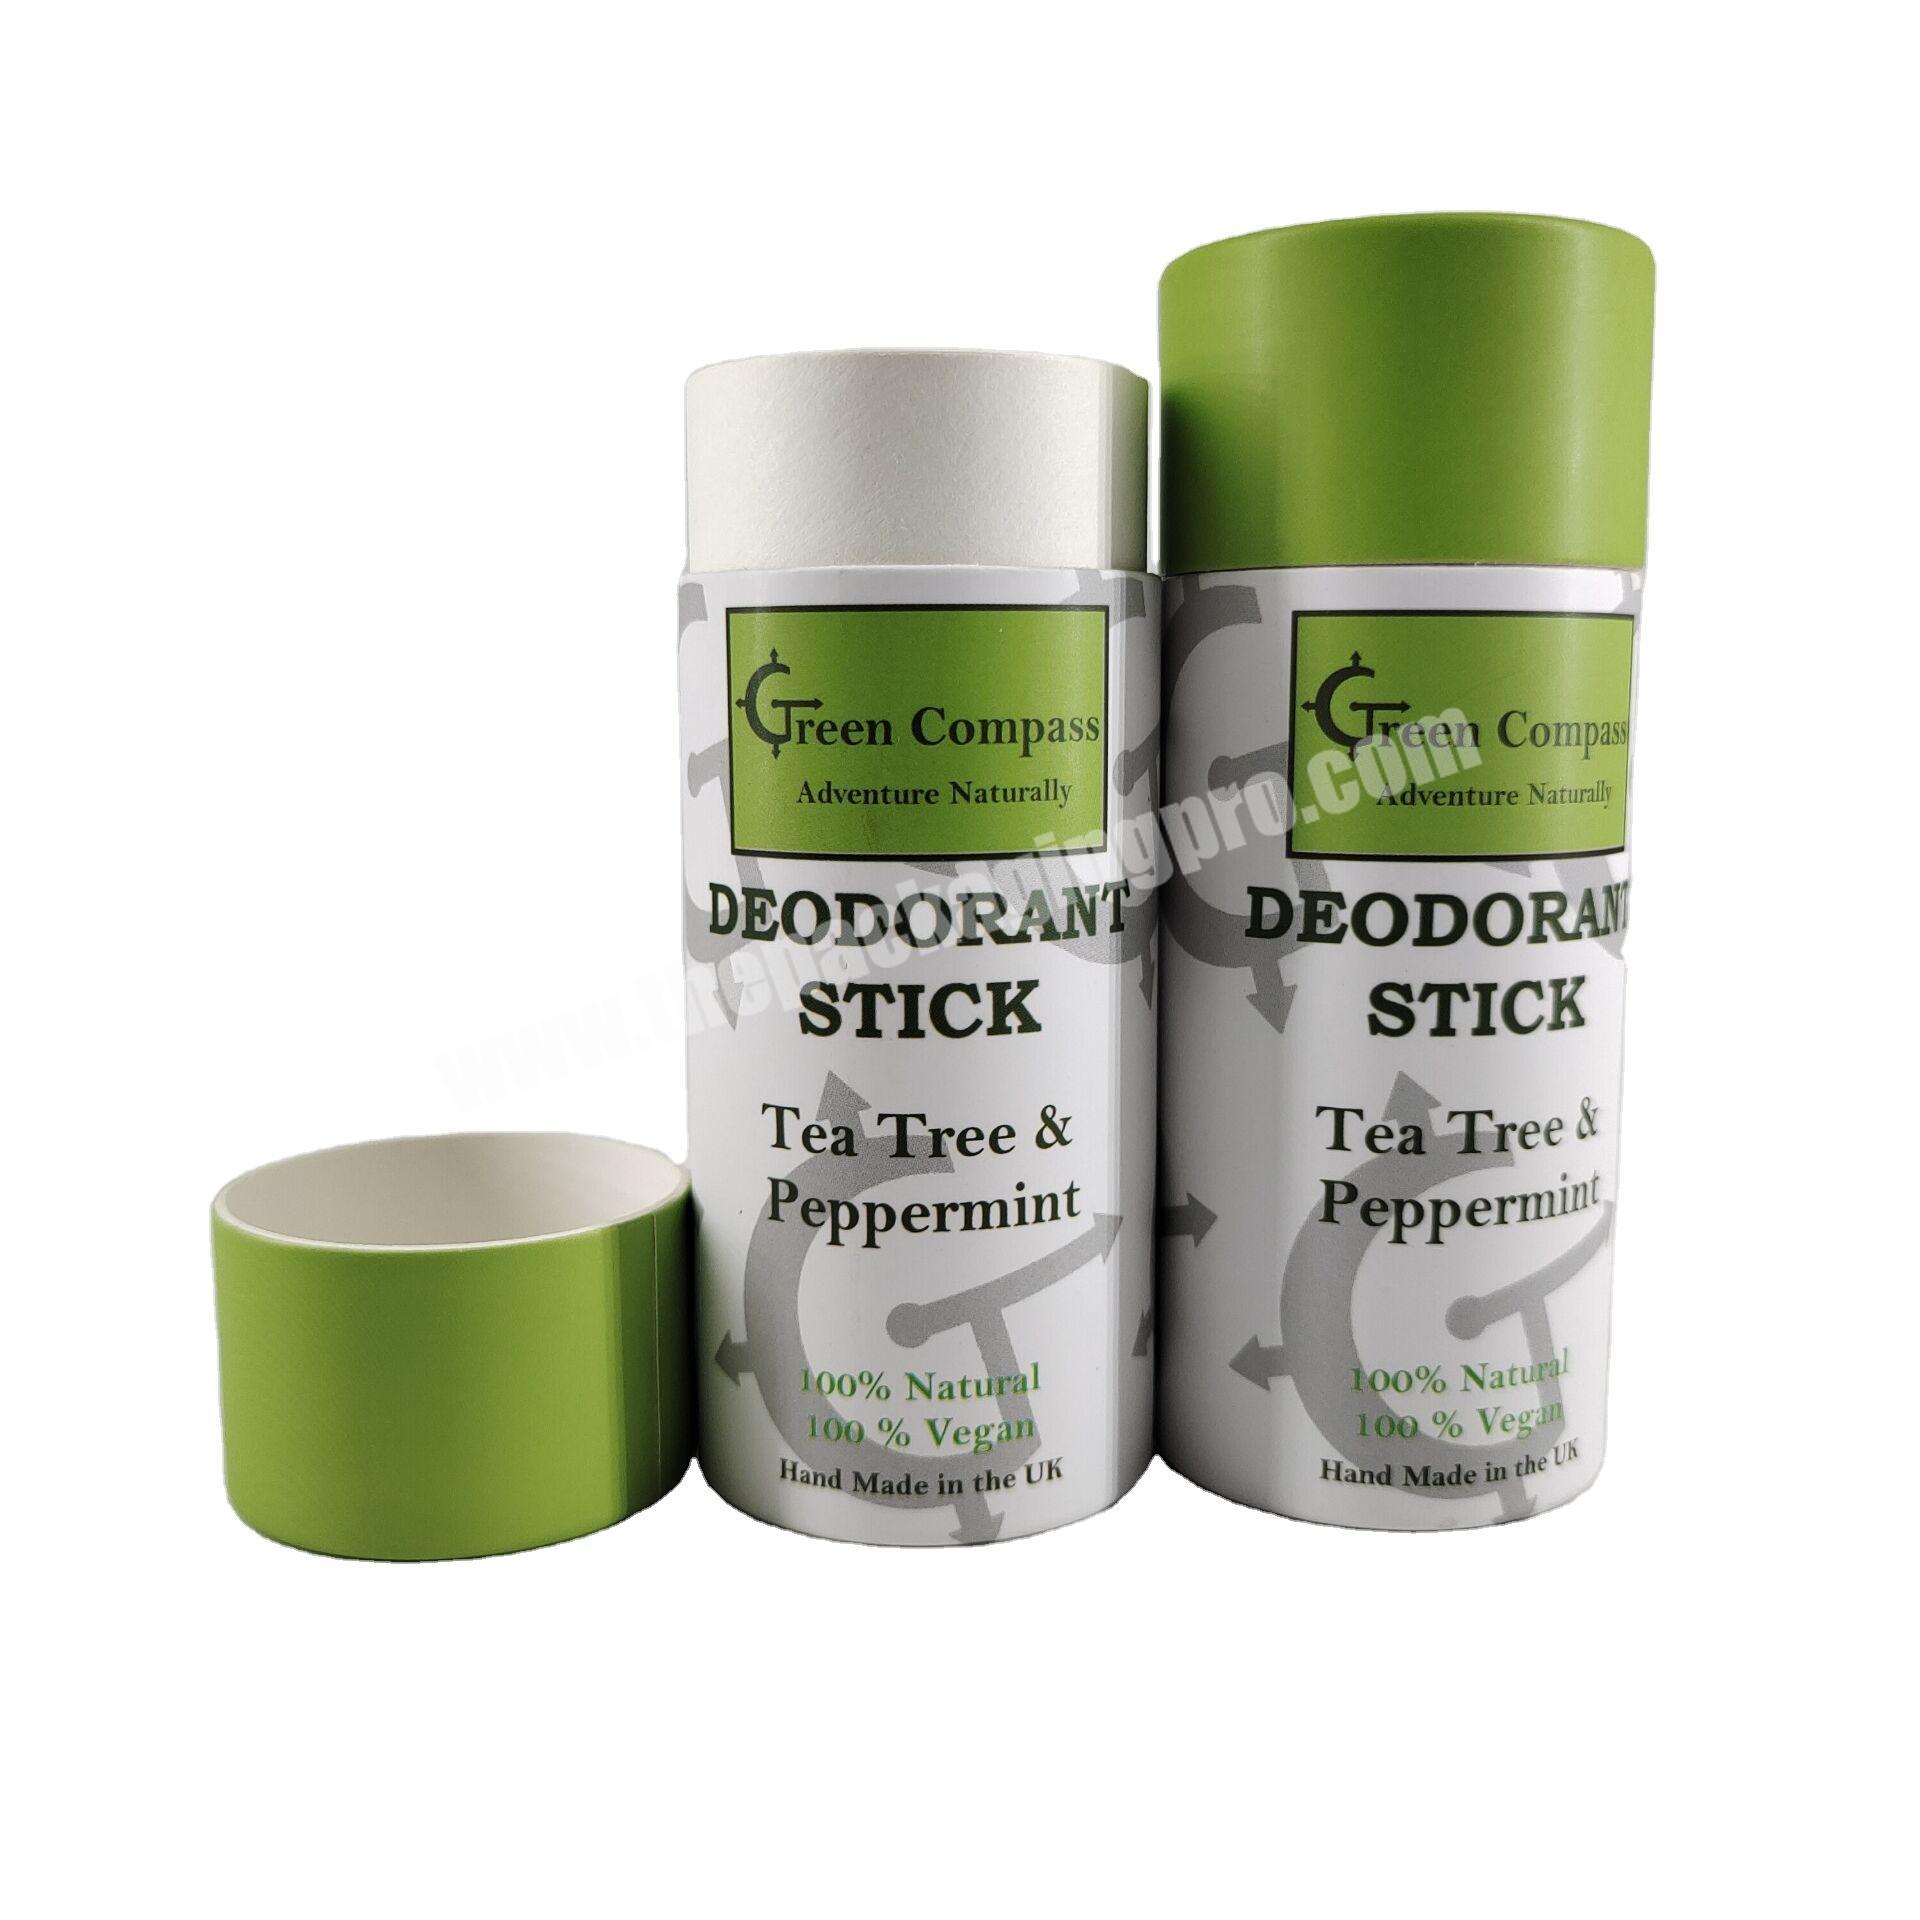 biodegradable plastic free zero waste push up paper deodorant tube